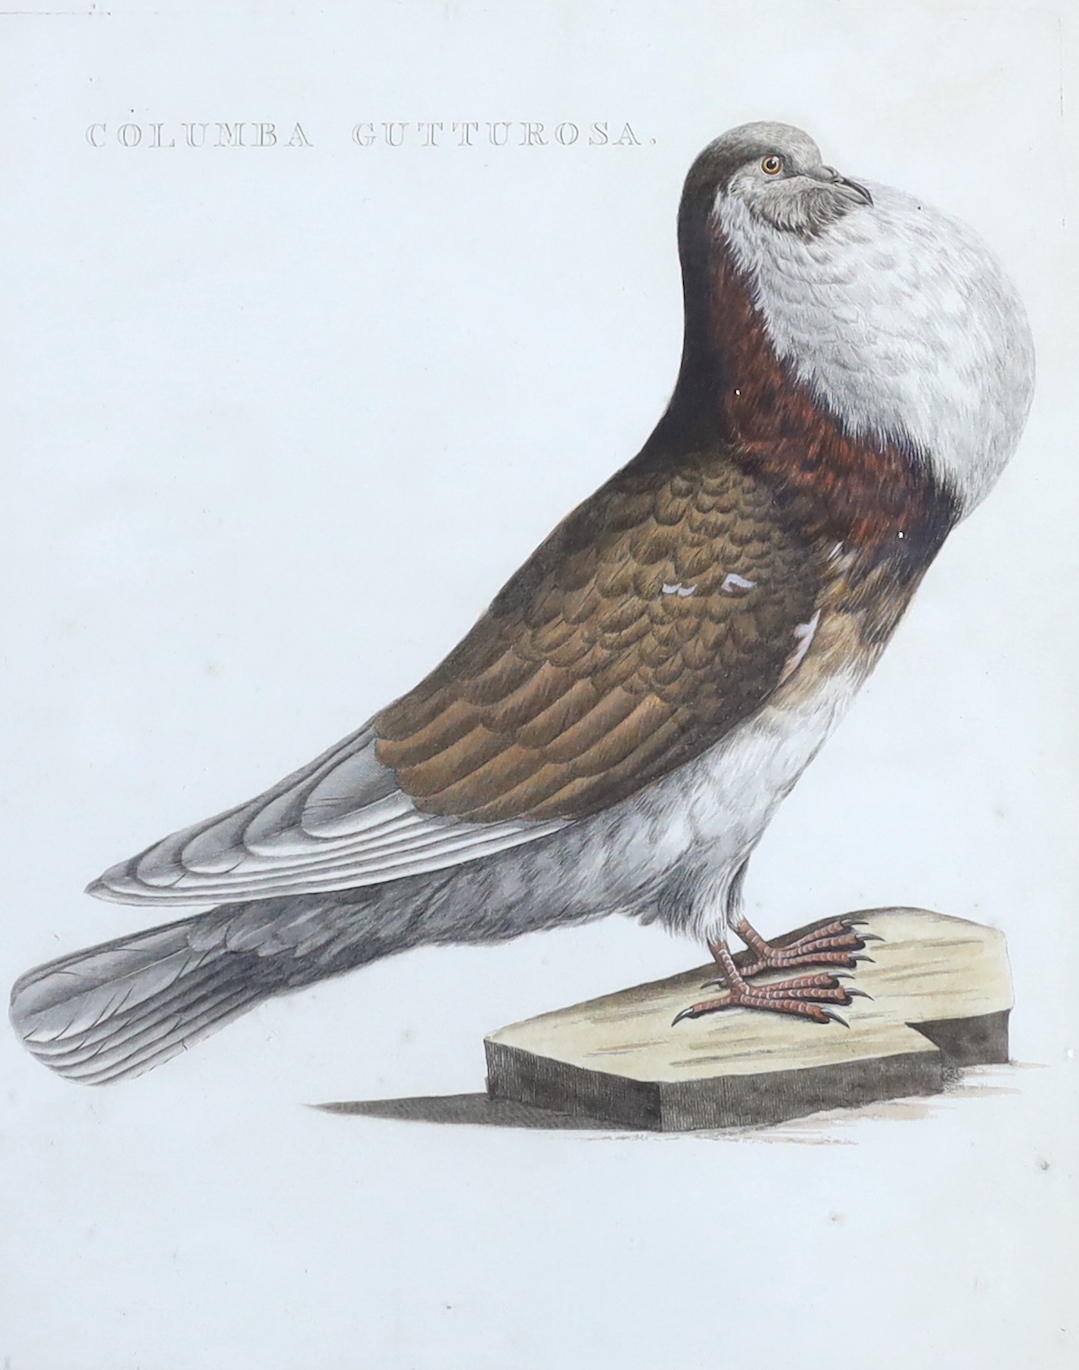 After Cornelis Nozeman (Dutch, 1721-1786), coloured engraving, Pigeon (Colmba Gutturosa), inscribed to the mount, 40 x 32cm